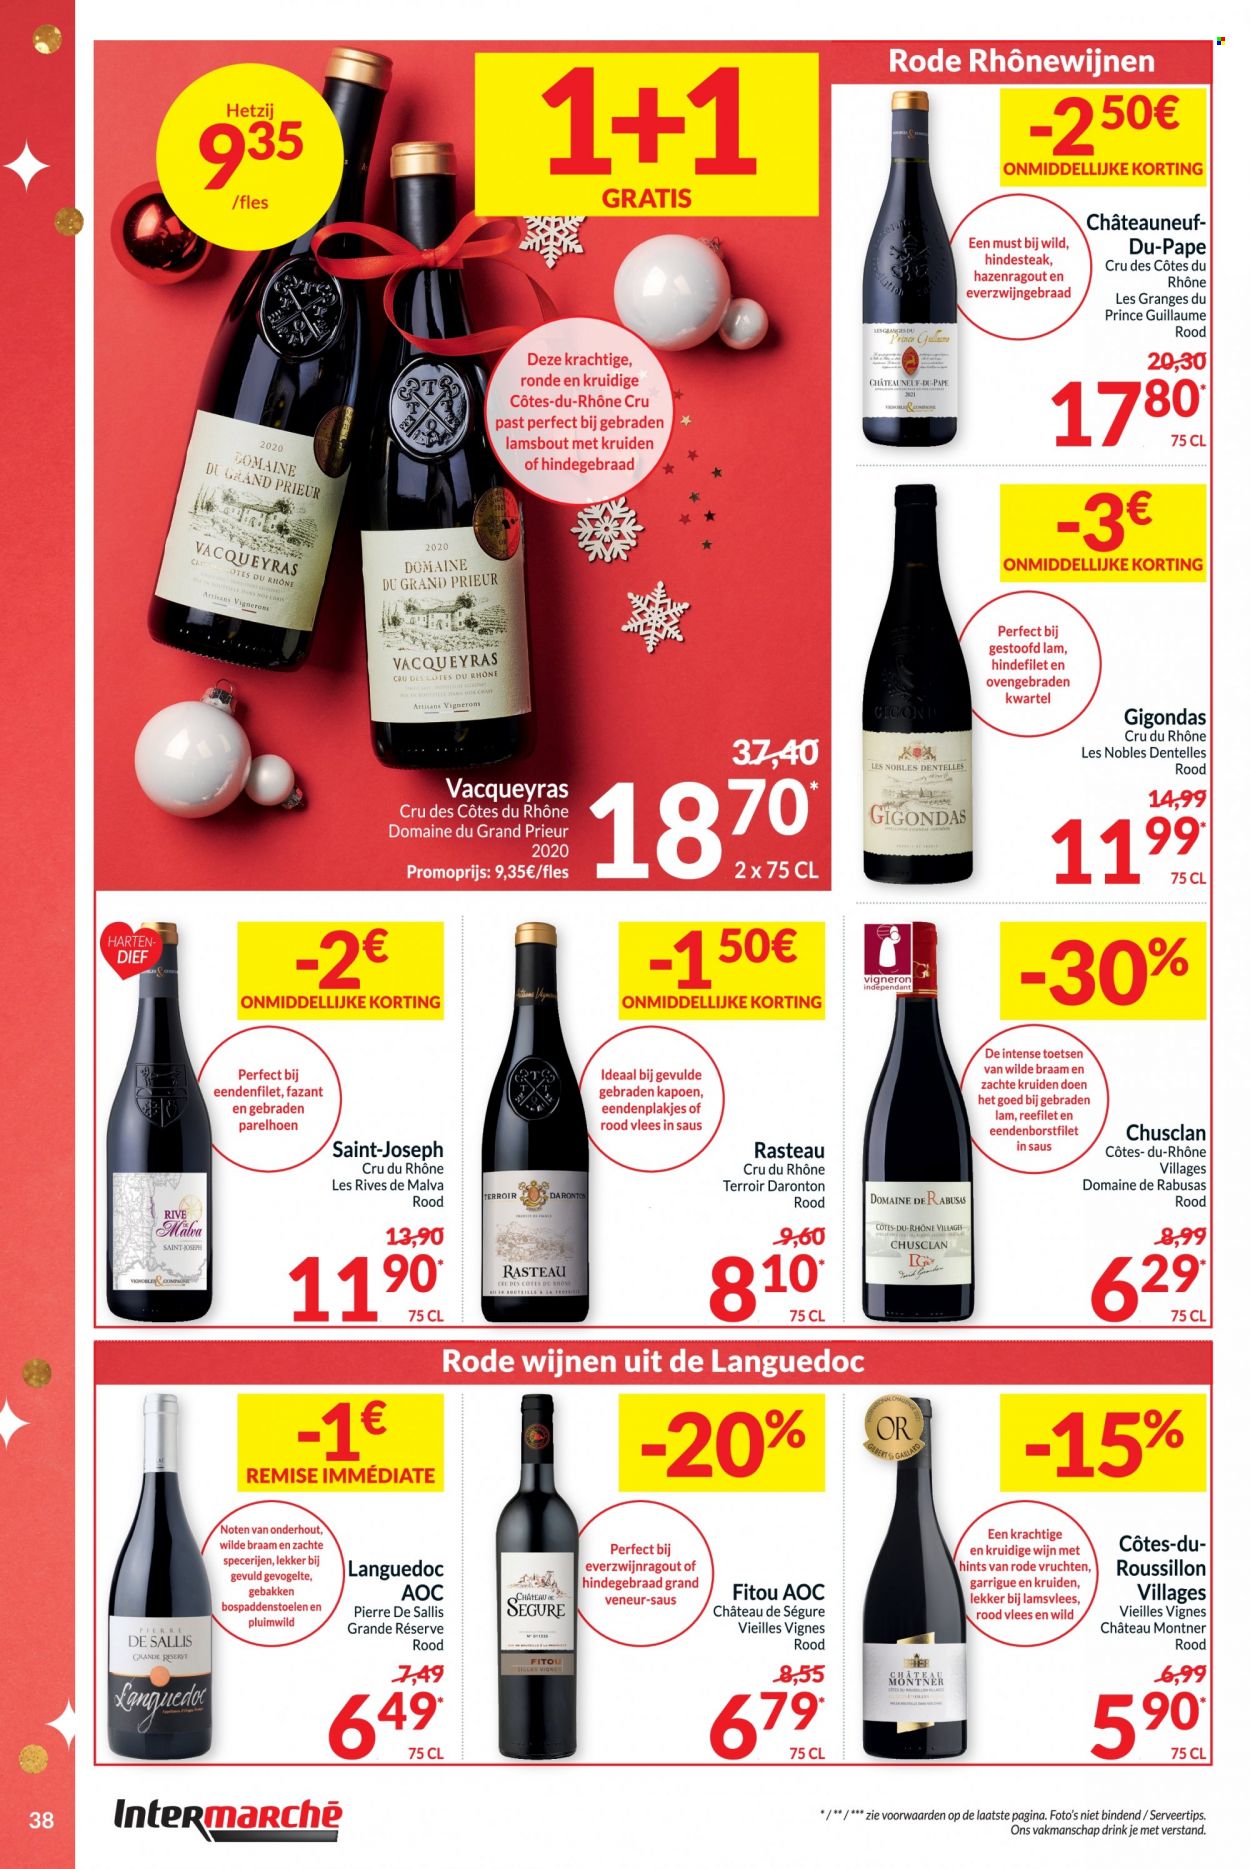 thumbnail - Intermarché-aanbieding - 22/11/2022 - 31/12/2022 -  producten in de aanbieding - parelhoen, fazant, wijn, Côtes du Rhône, Côtes du Roussillon. Pagina 38.